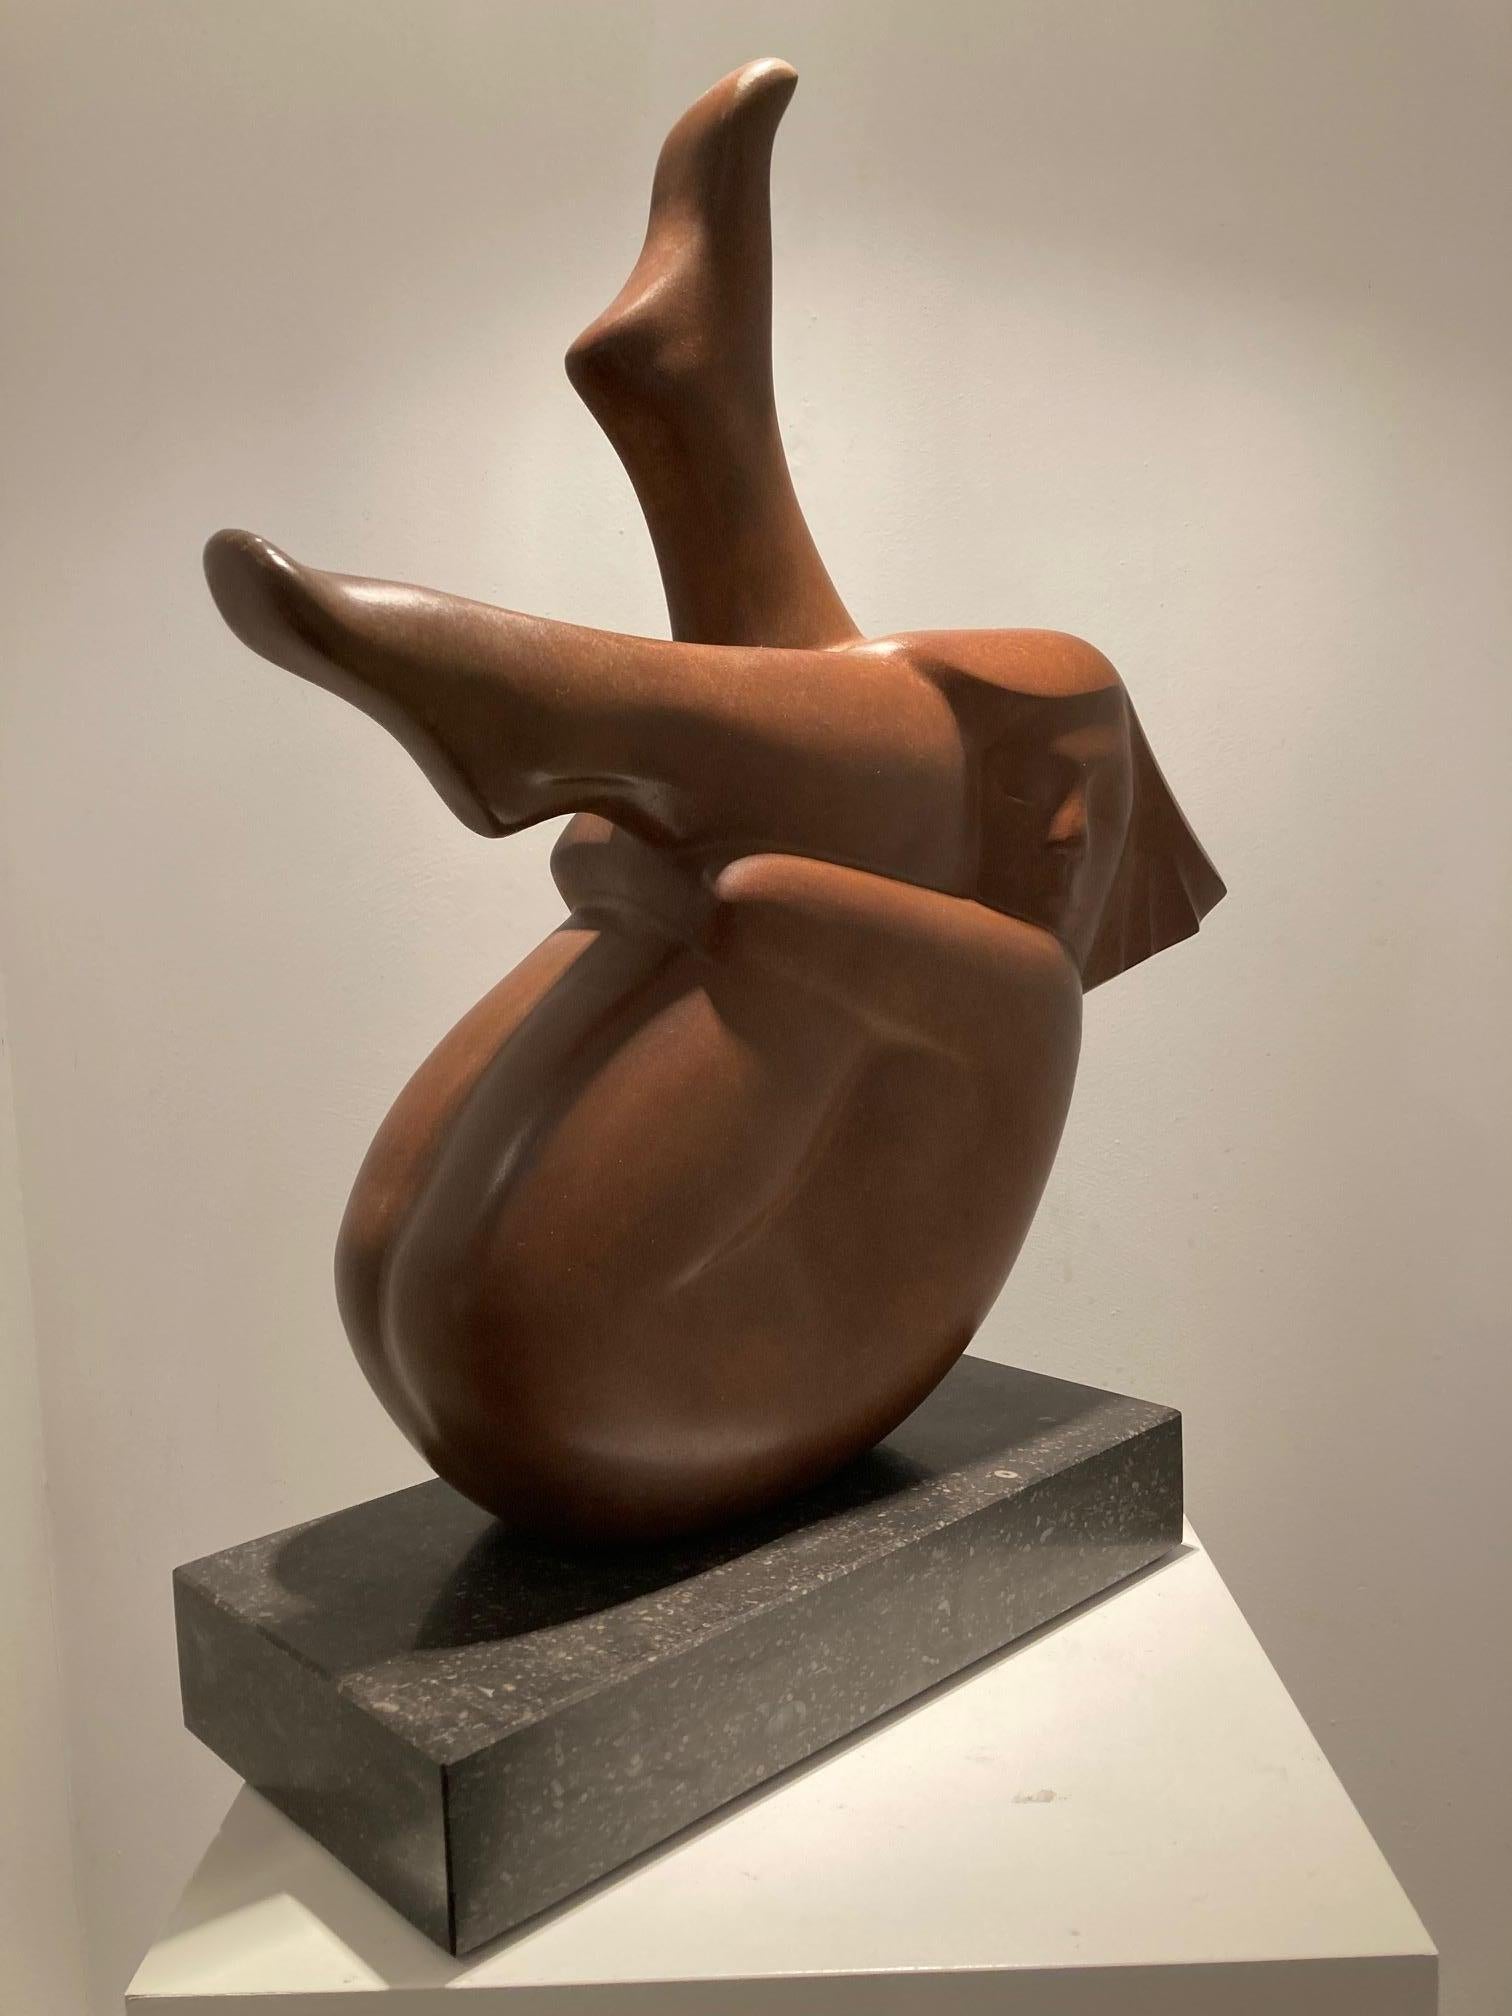 Liggend Meisje, jeune fille allongée, sculpture en bronze, édition limitée en stock - Sculpture de Evert den Hartog